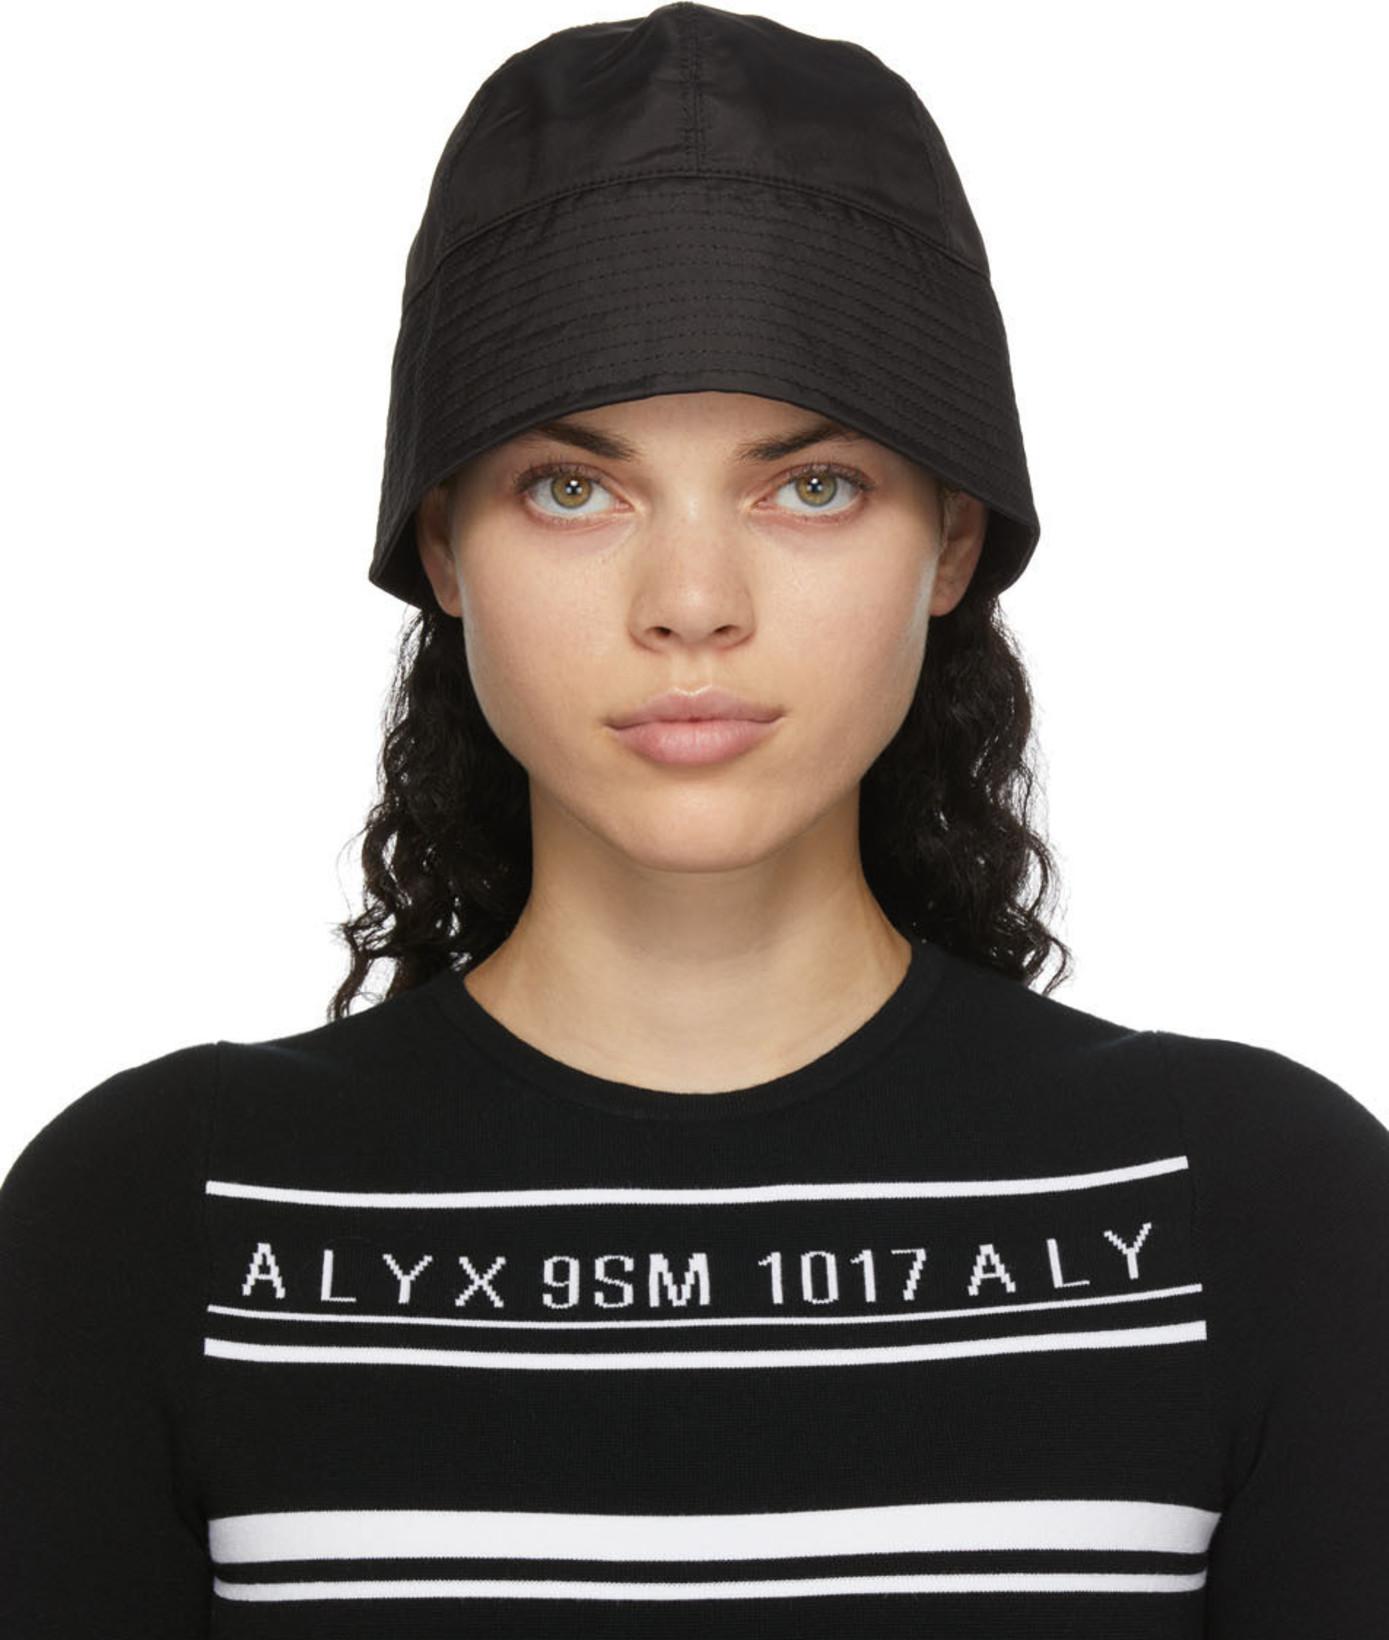 Black Narrow Bucket Hat by 1017 ALYX 9SM